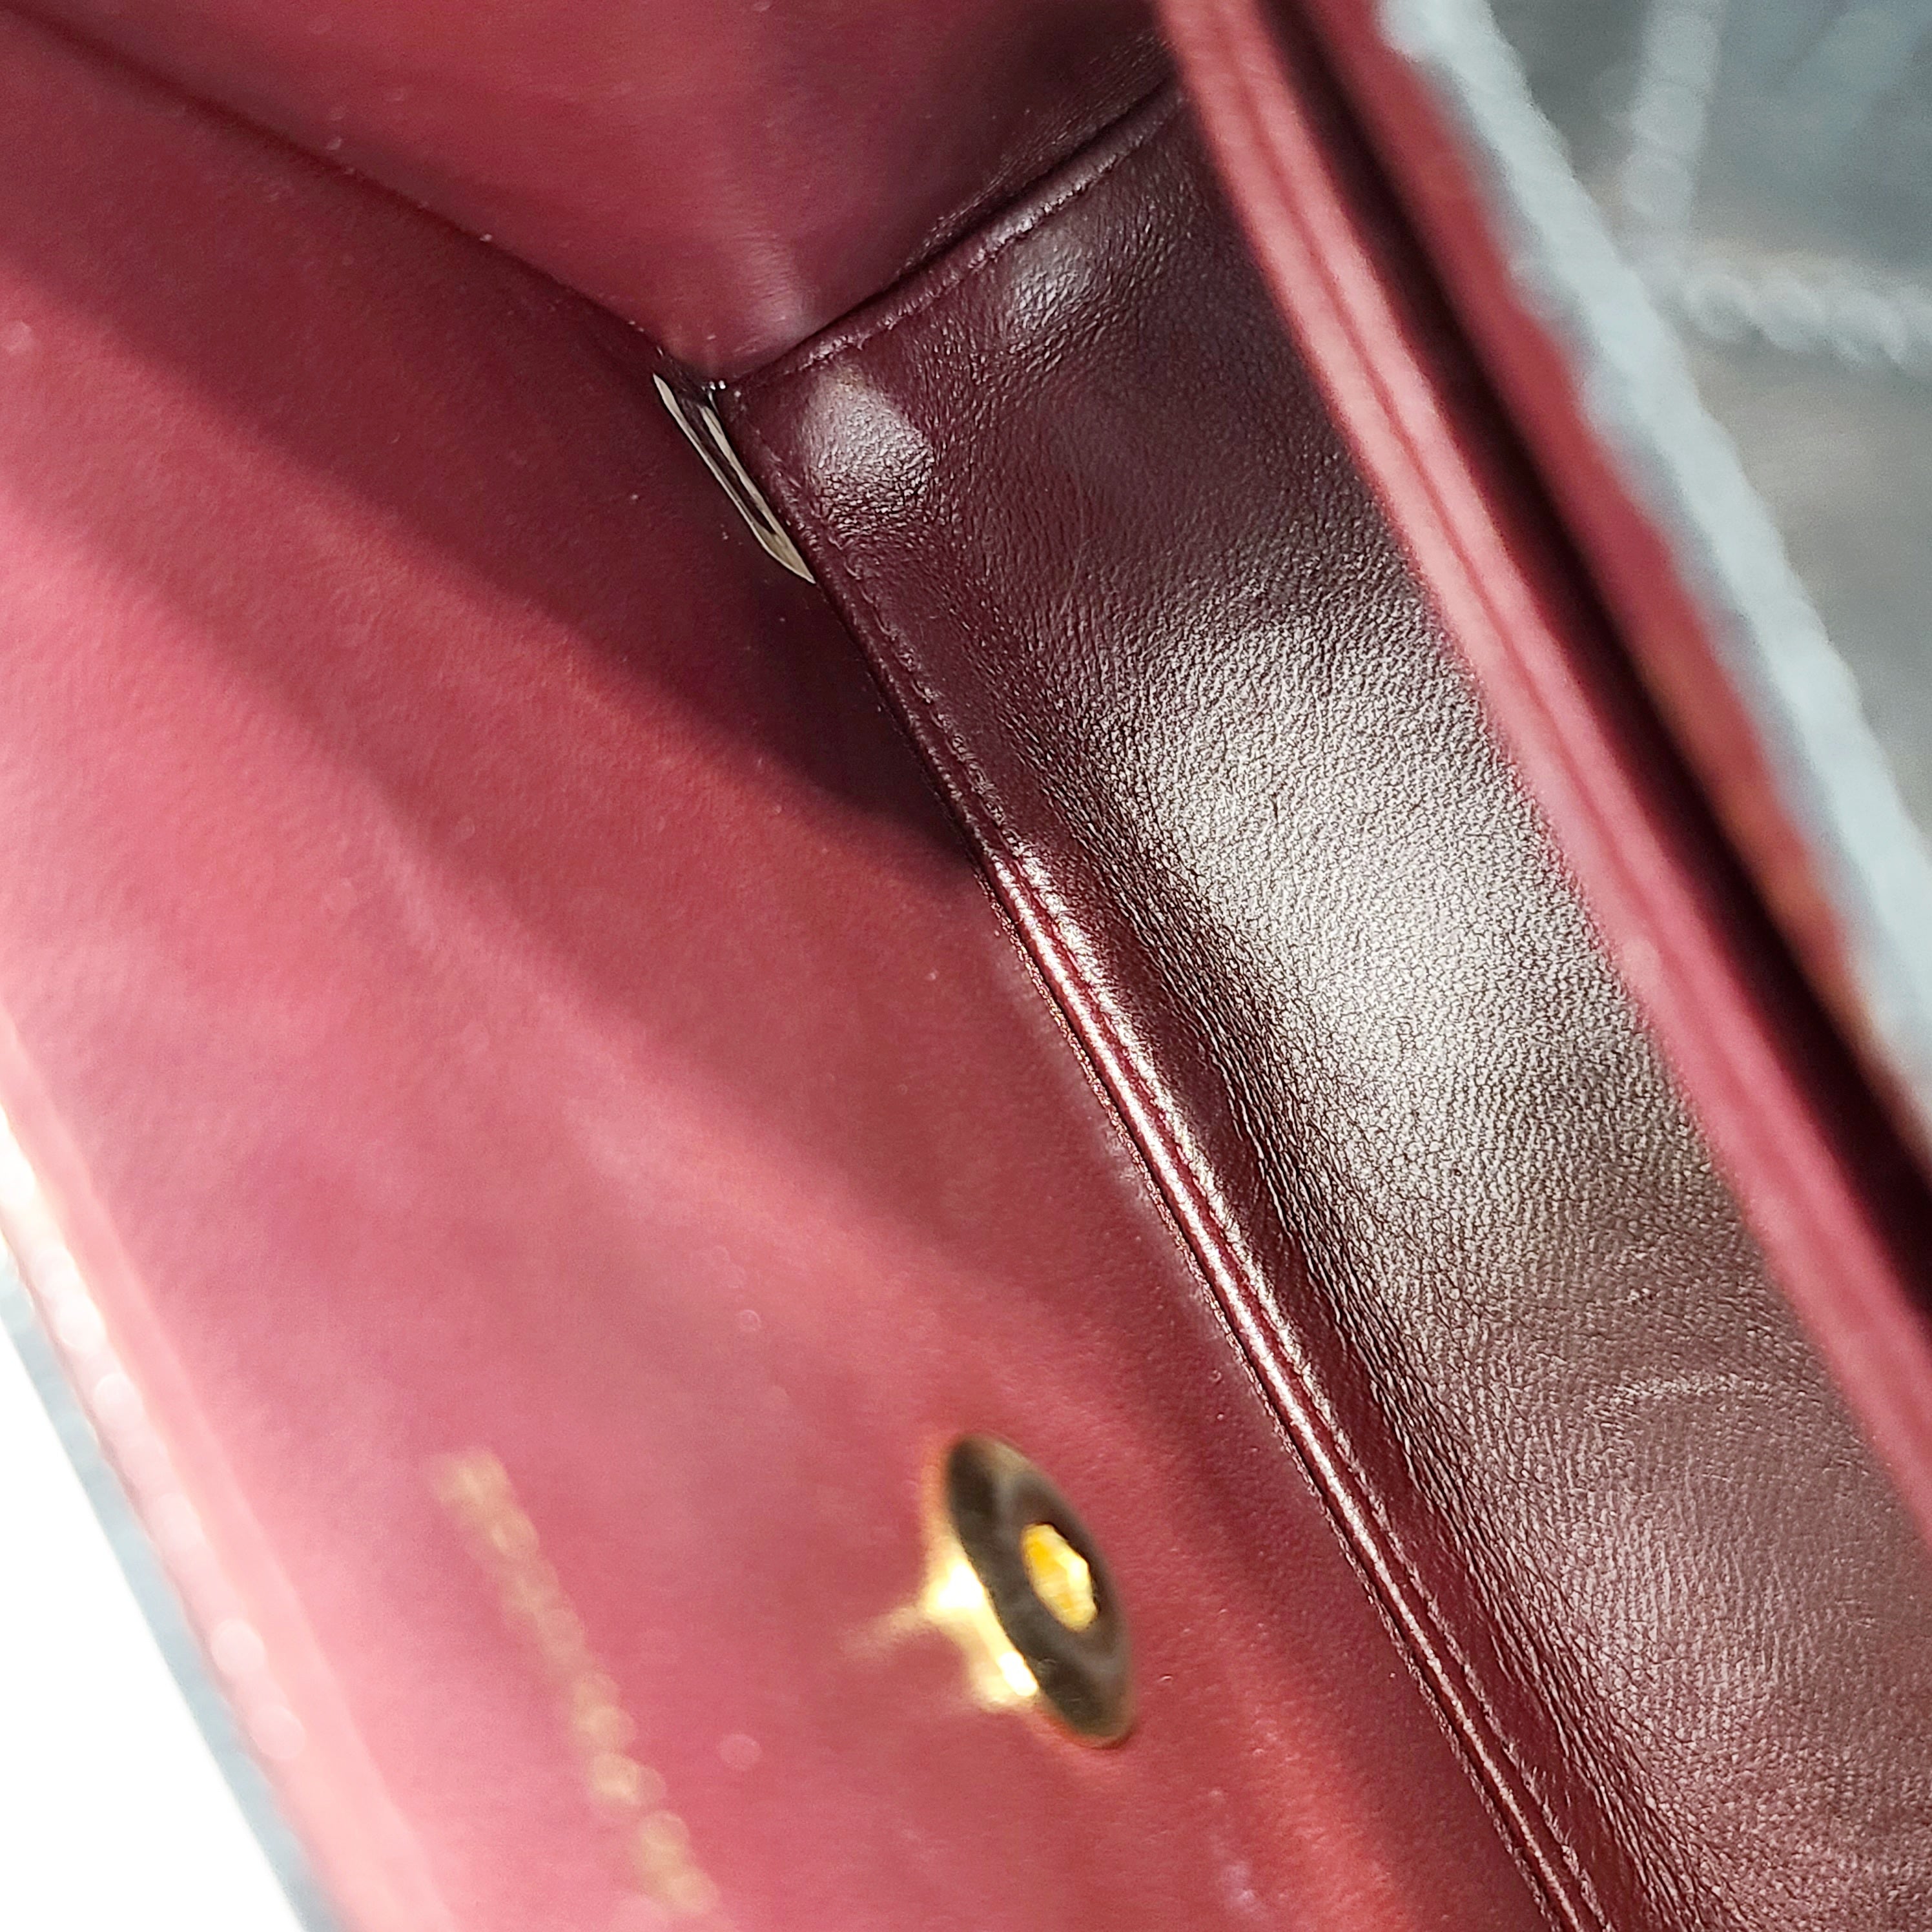 Chanel Matelasse Handbag Women's Black Leather Shoulder Bag Gently used | 9.64L x 6.88W x 3.14H Original Listing PRICE: + Tax